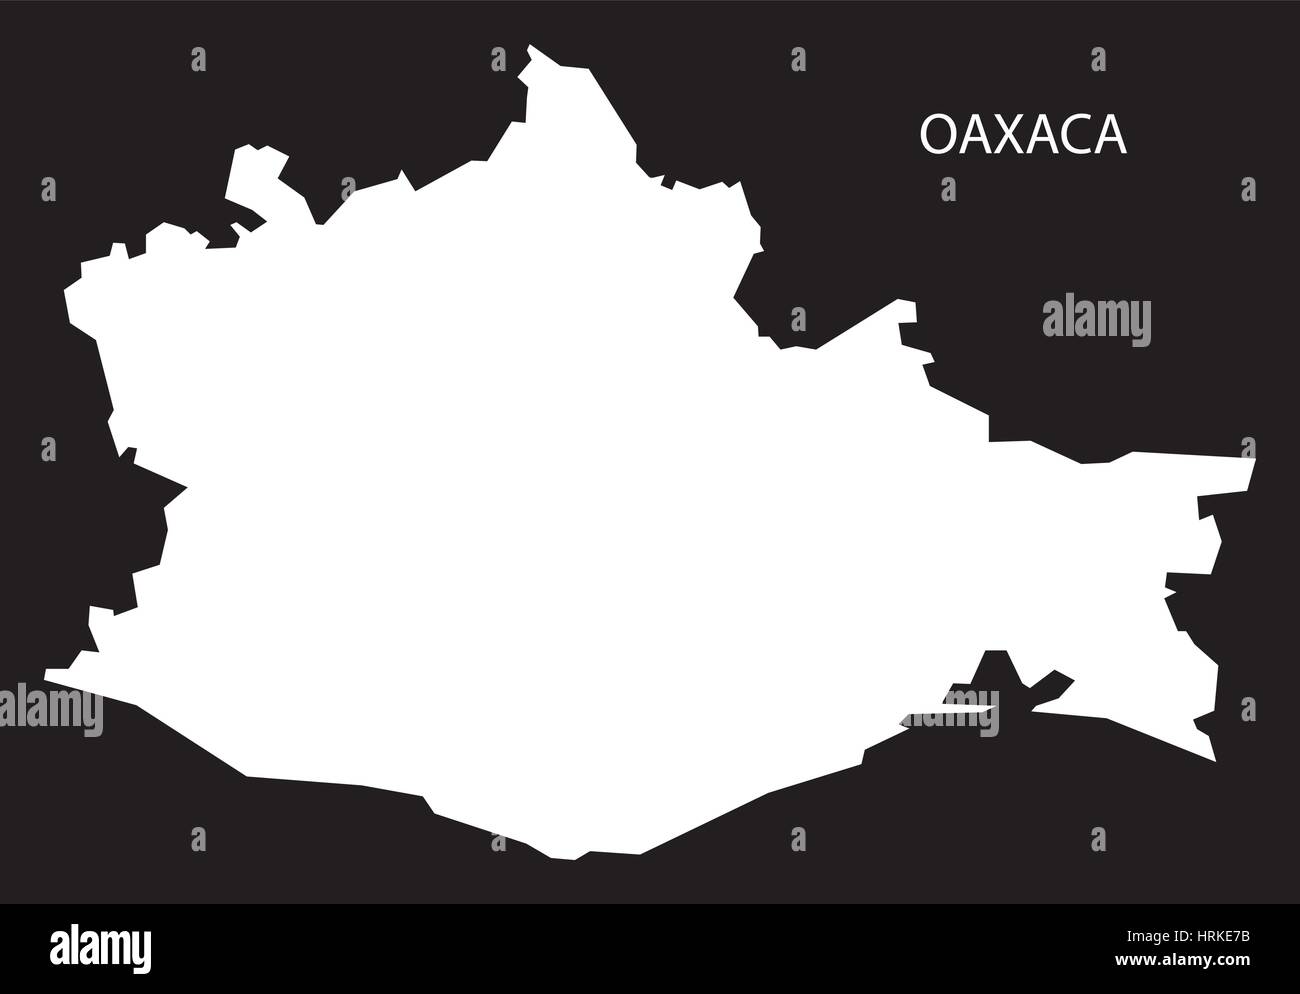 Oaxaca Mexico Map schwarz invertiert silhouette Stock Vektor